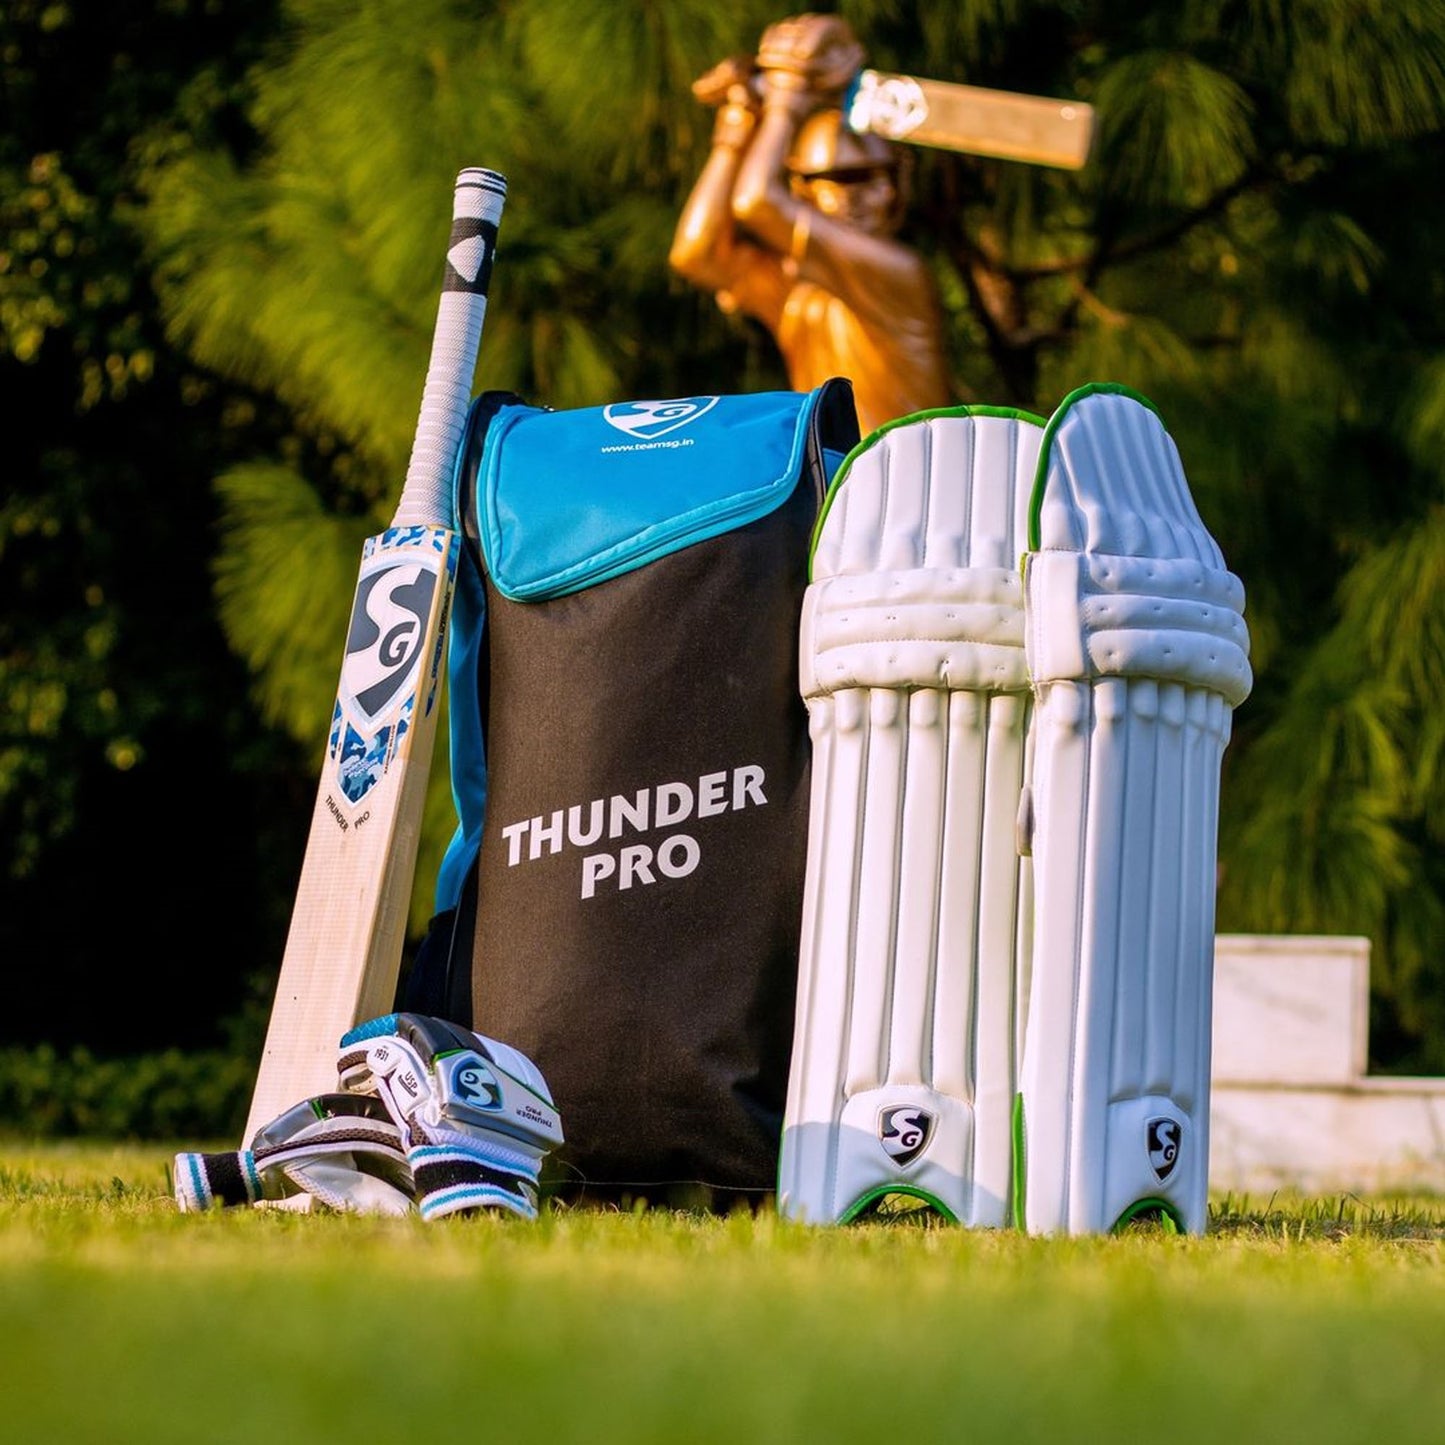 SG Thunder Pro Kashmir Willow Cricket Kit - Assorted Color - Best Price online Prokicksports.com